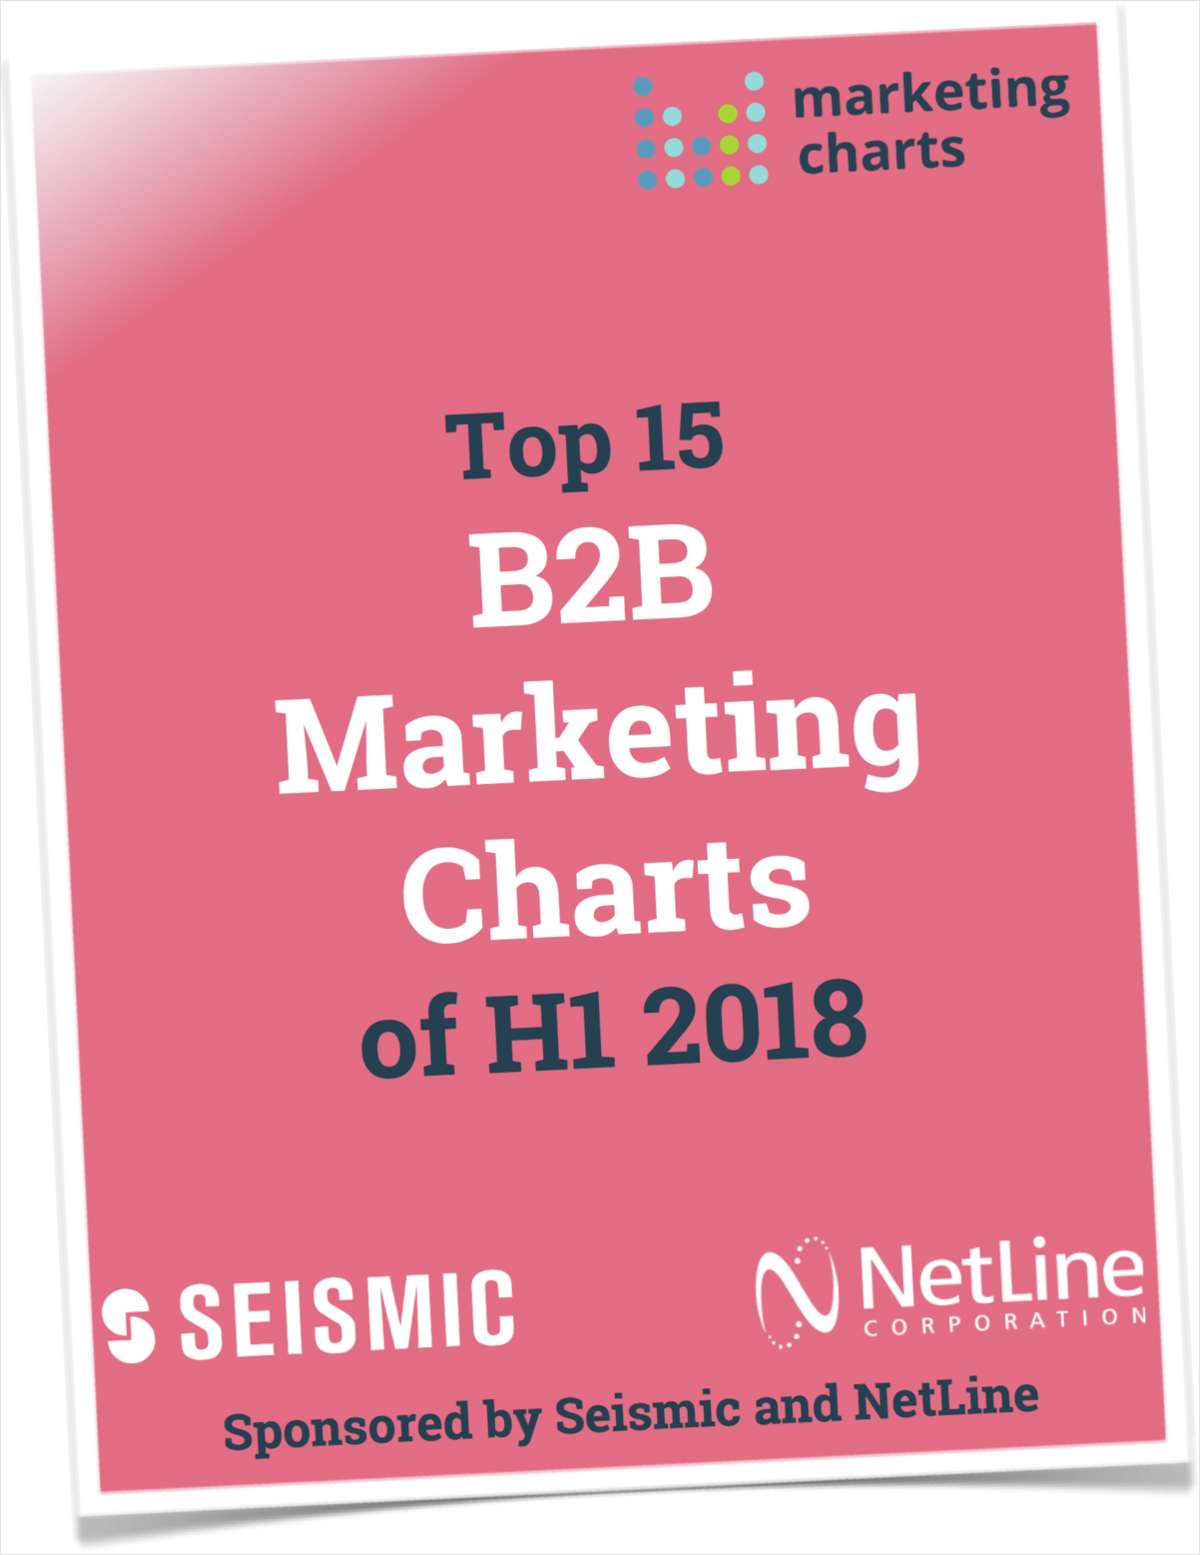 Top 15 B2B Marketing Charts of H1 2018